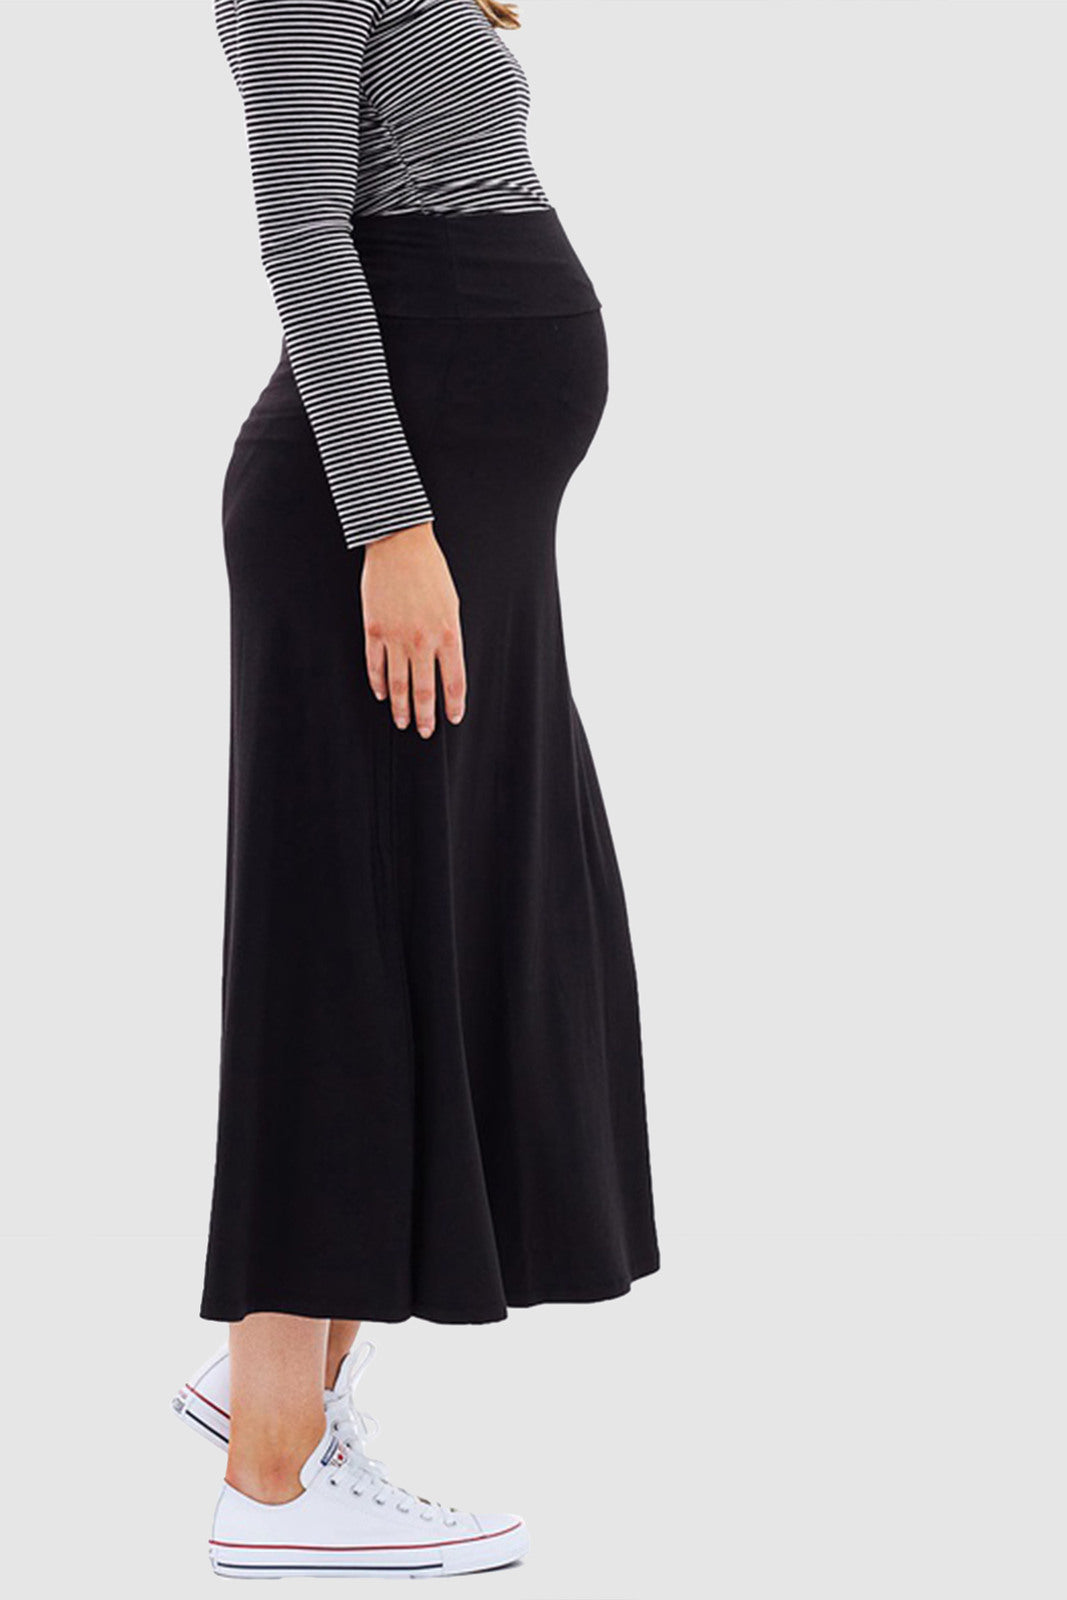 Organic Bamboo Lana Long Maternity Skirt Maternity Skirt from Bamboo Body maternity online store brisbane sydney perth australia